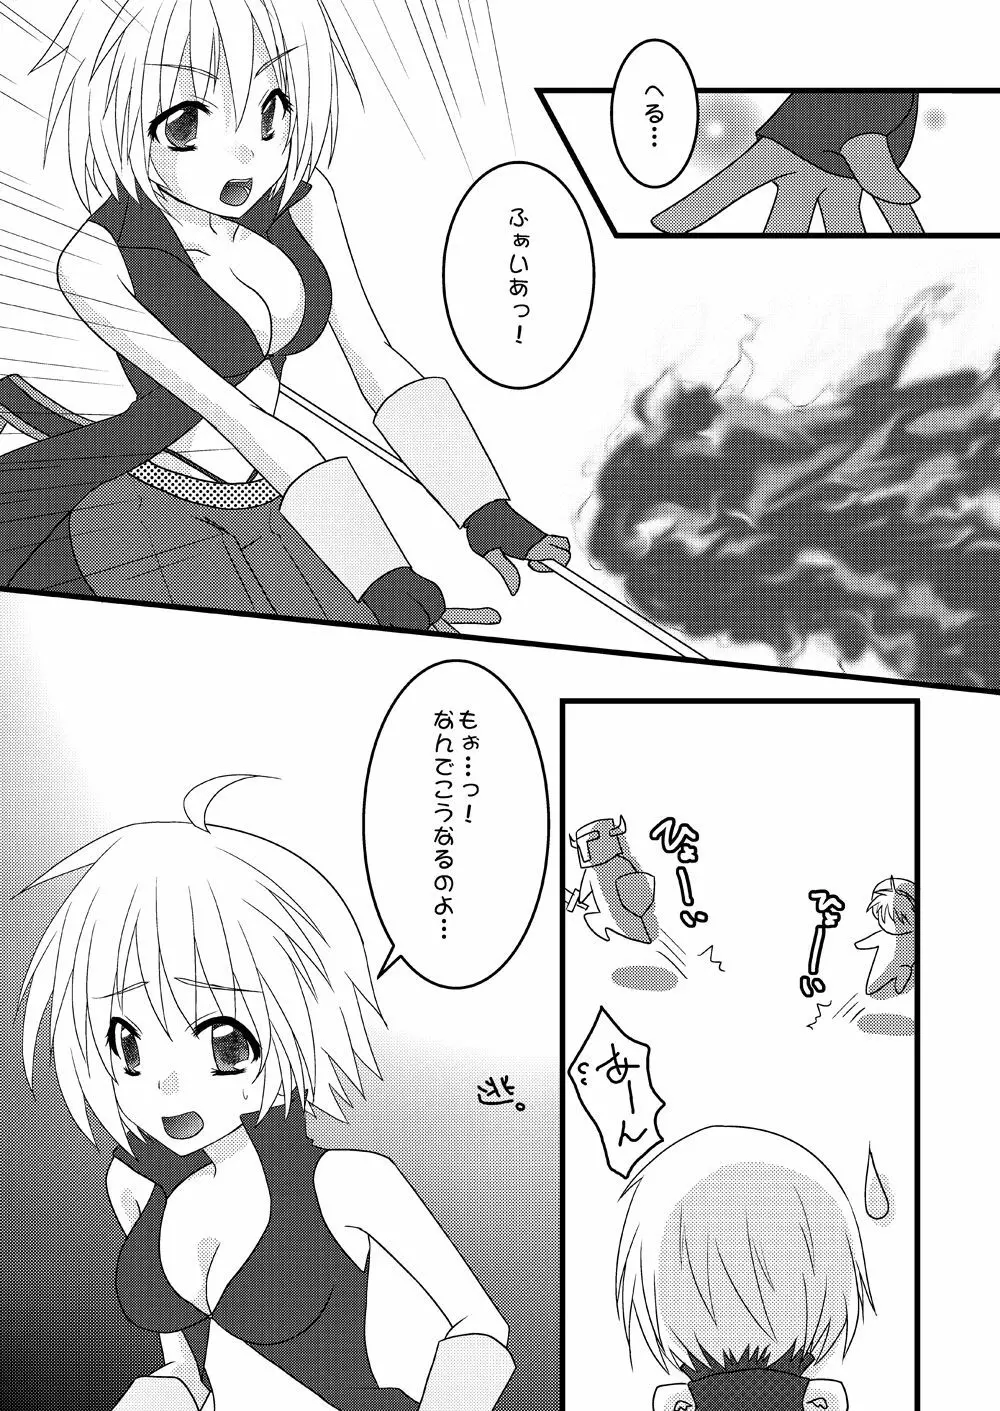 FEZ本まとめ - page11